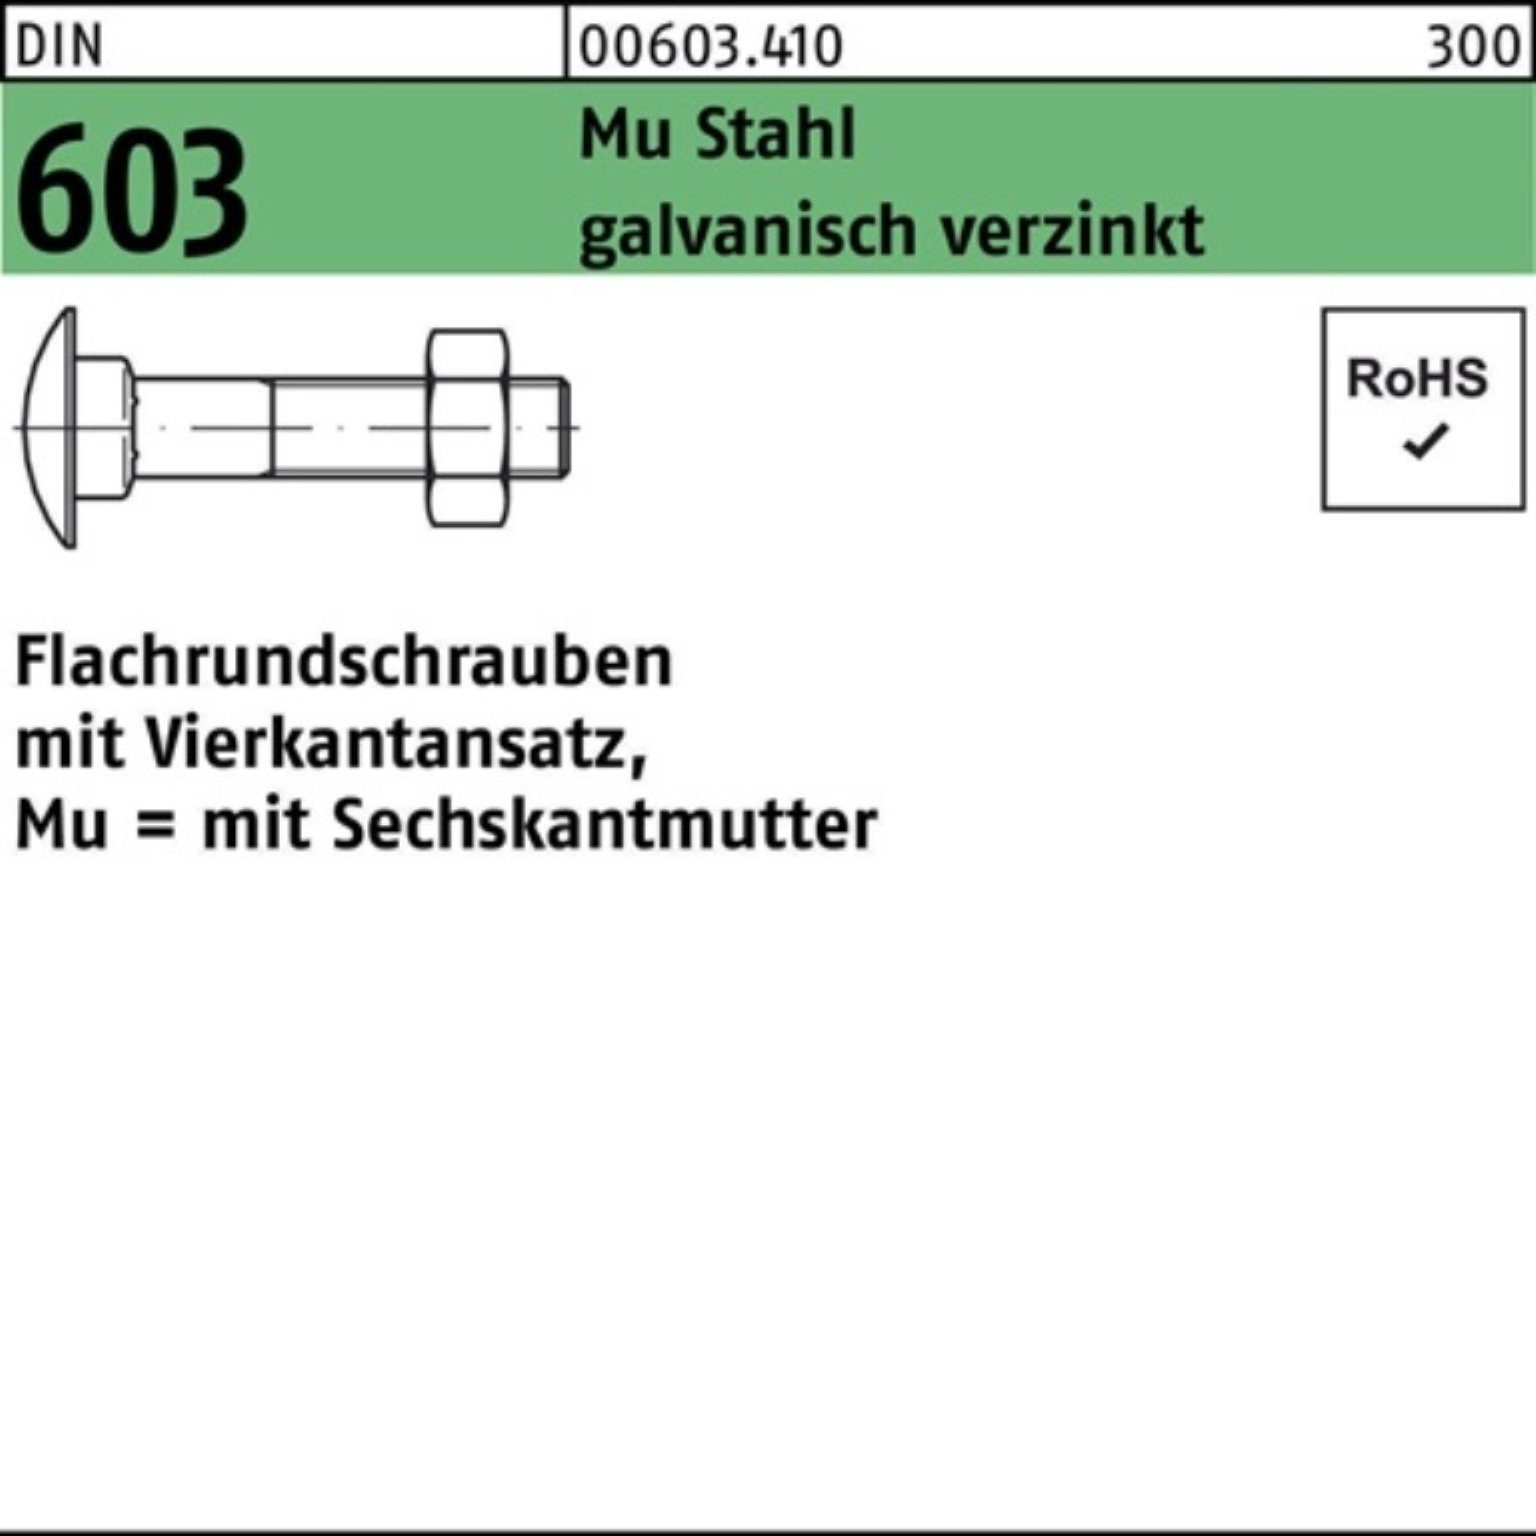 100er Flachrundschraube Vierkantansatz/6-ktmutter Pack Schraube DIN M16x160 Reyher 603